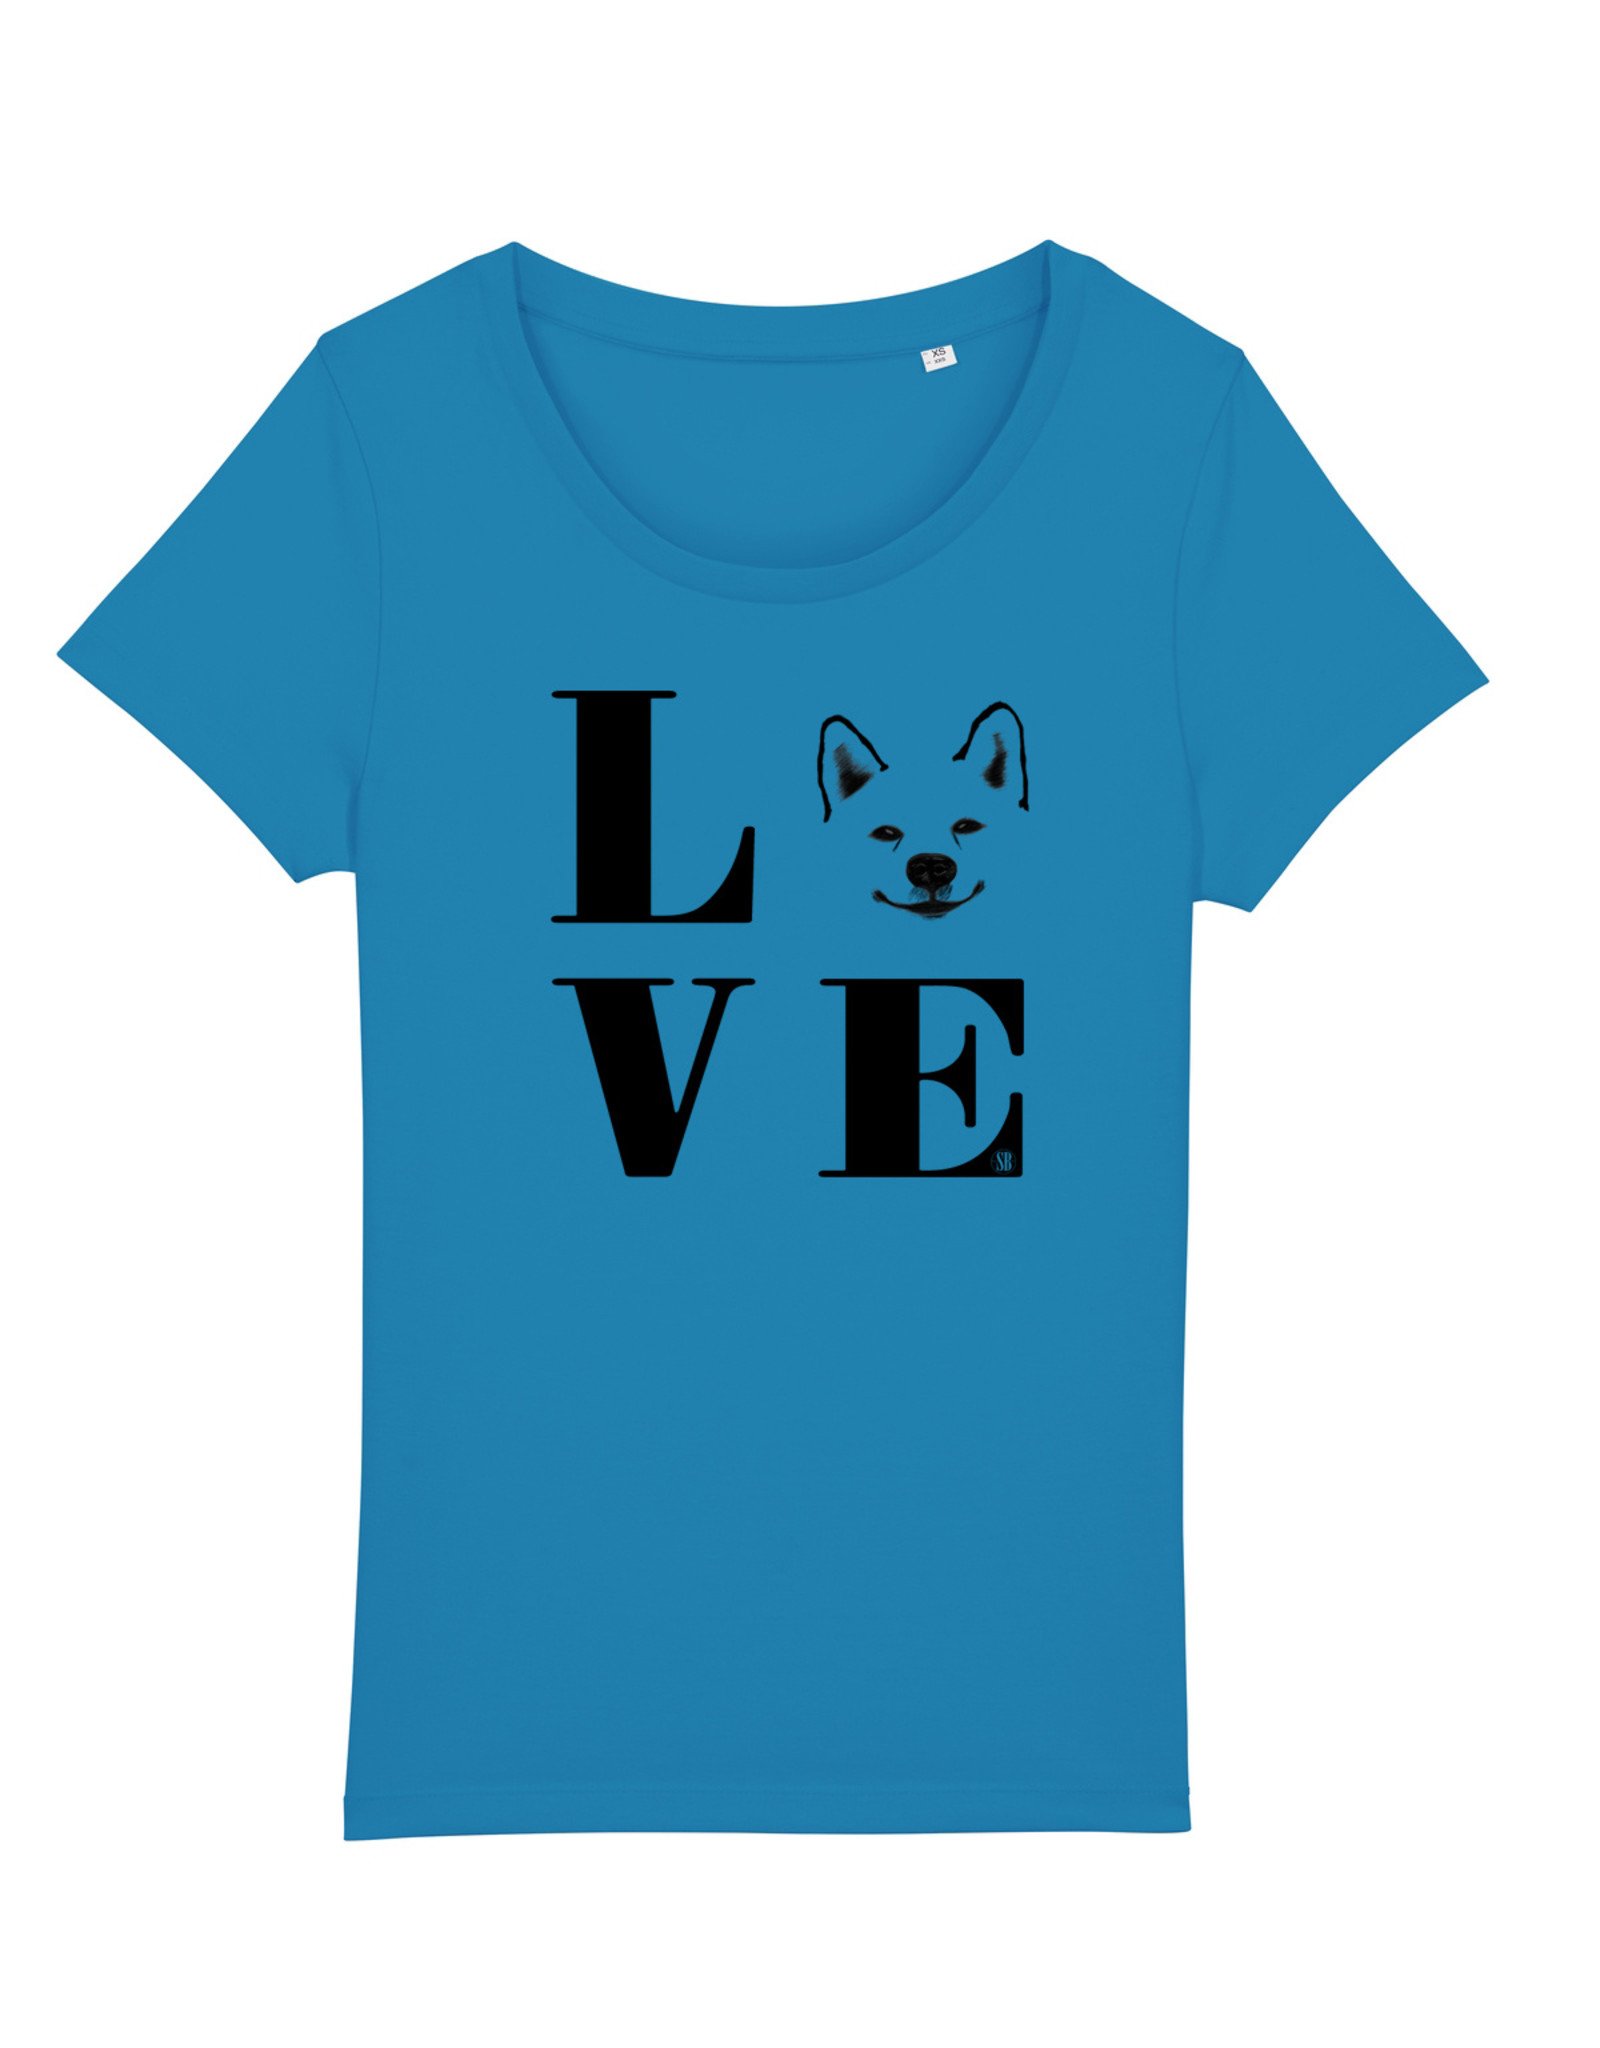 Shiba Boutique Shiba Love T-shirt Women